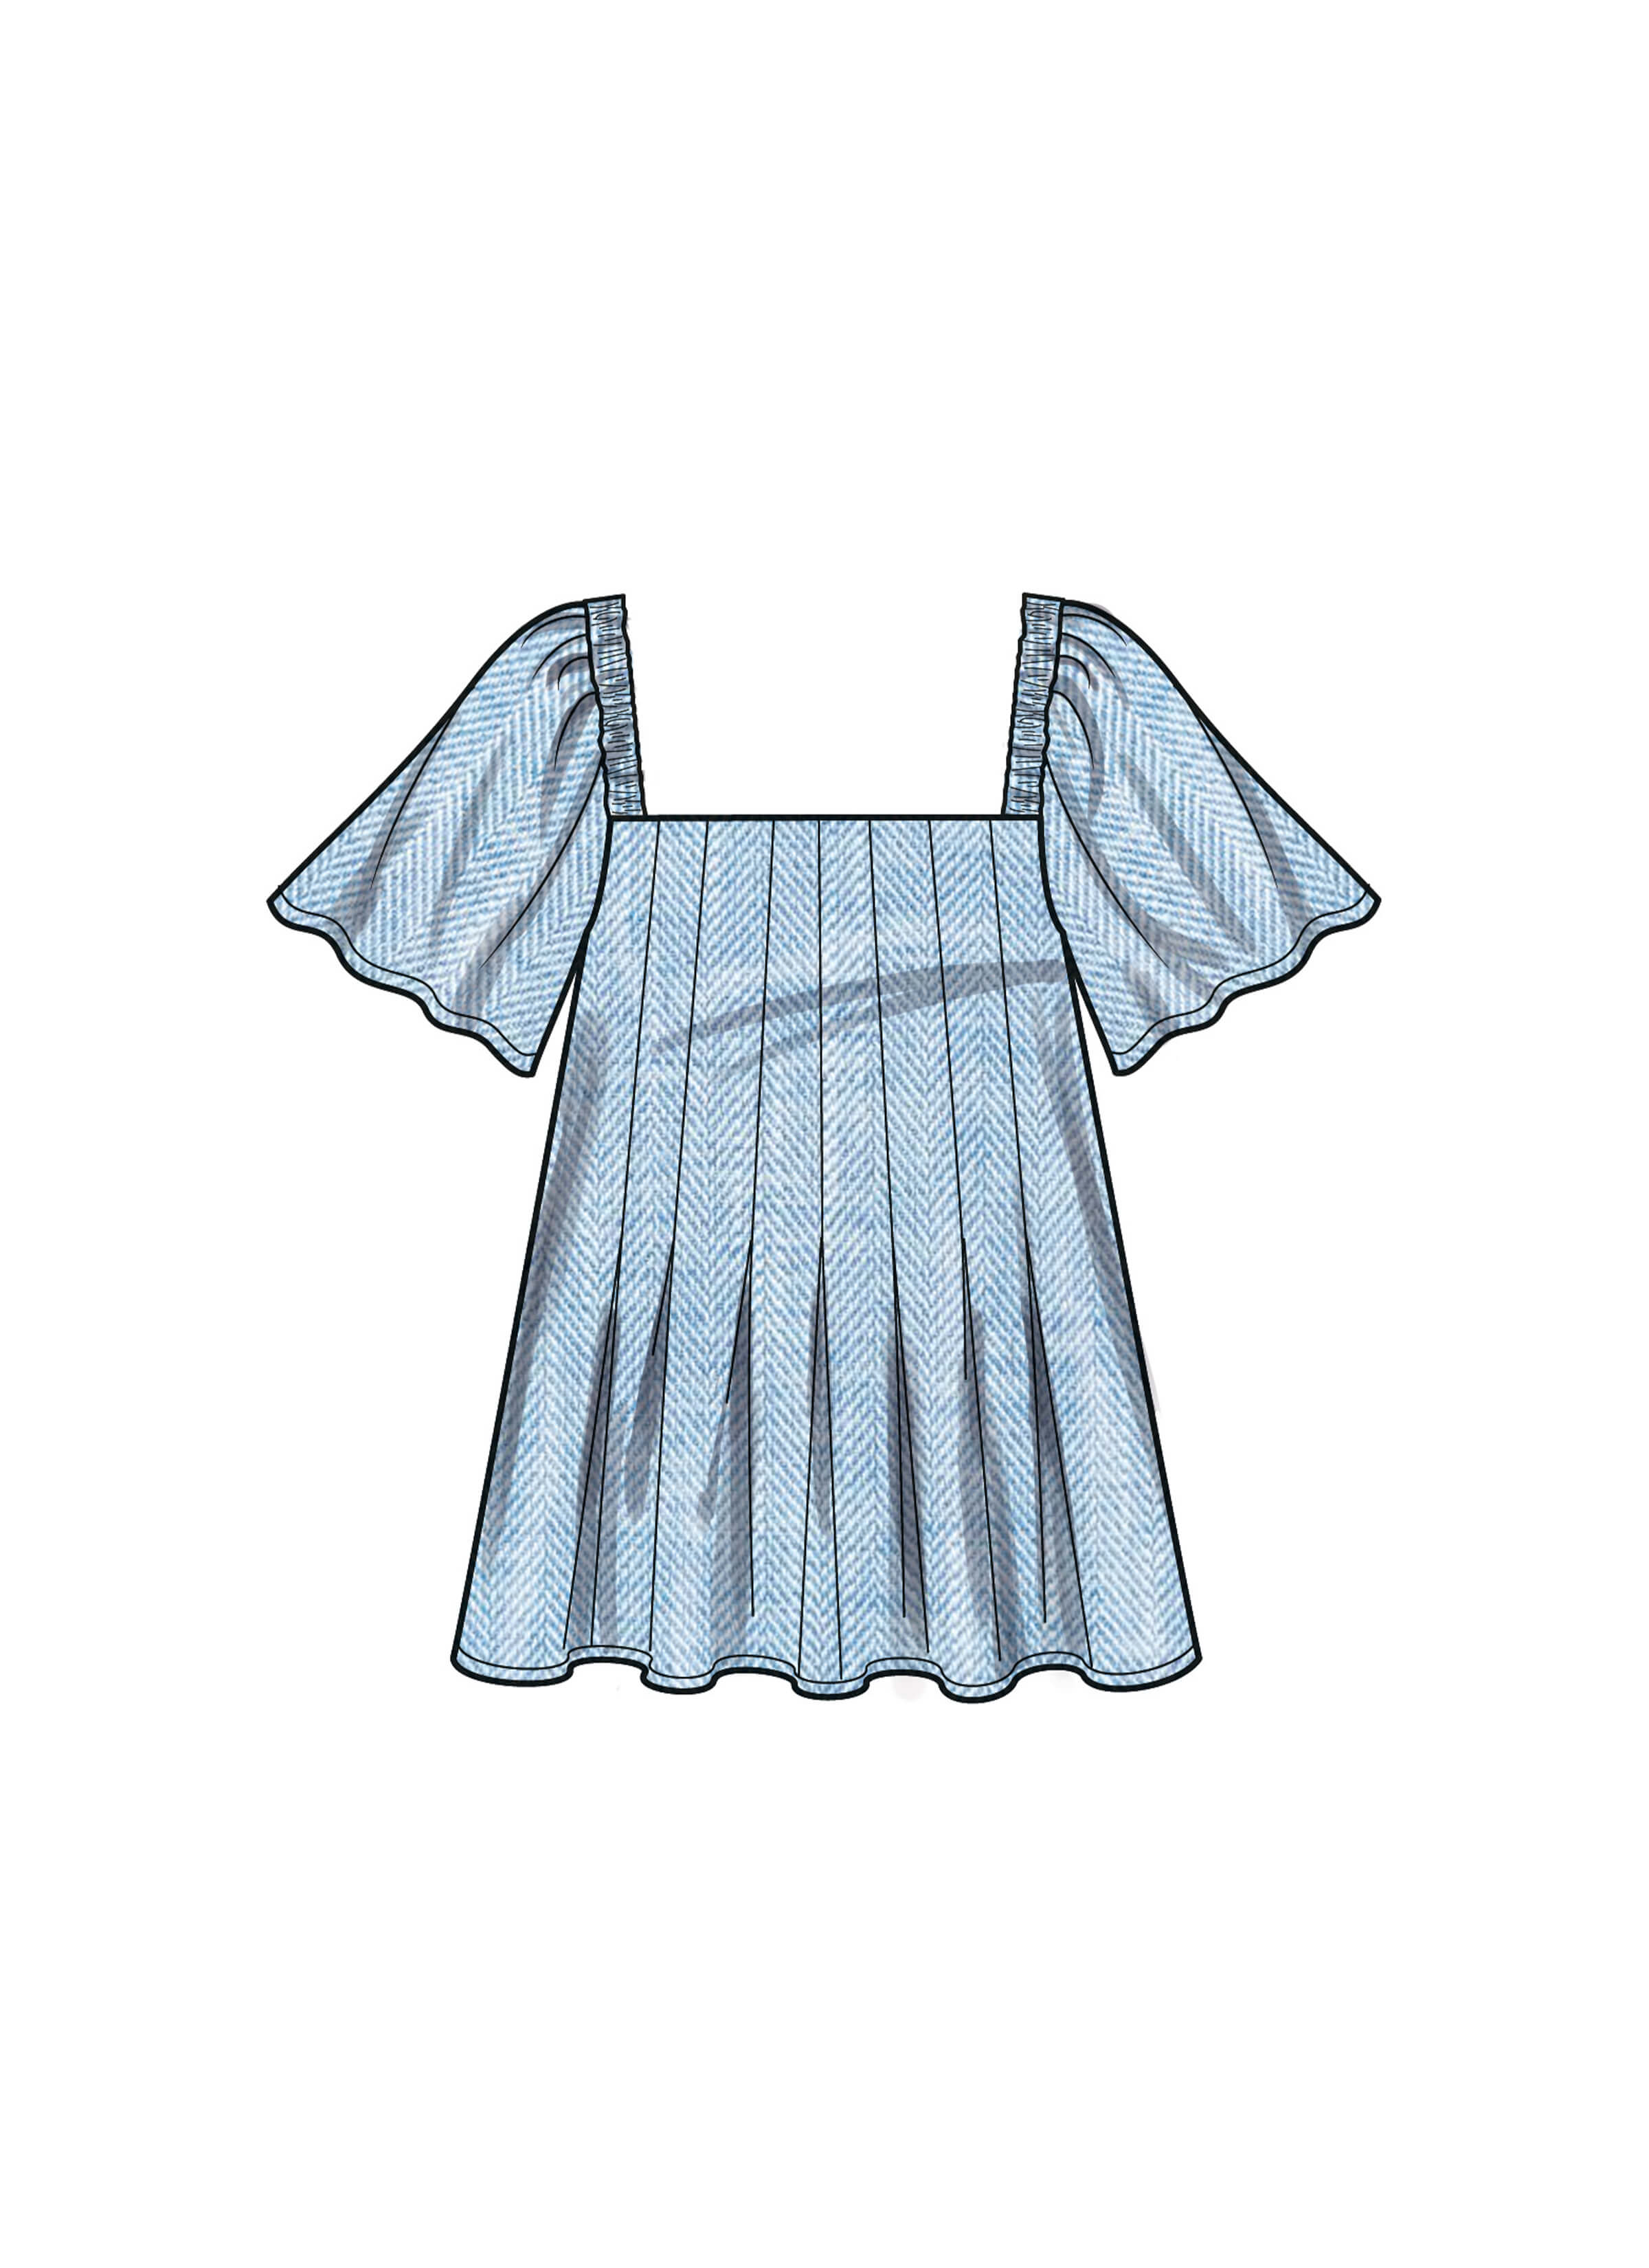 New Look Sewing Pattern N6754 Misses' Top With Sleeve Variations